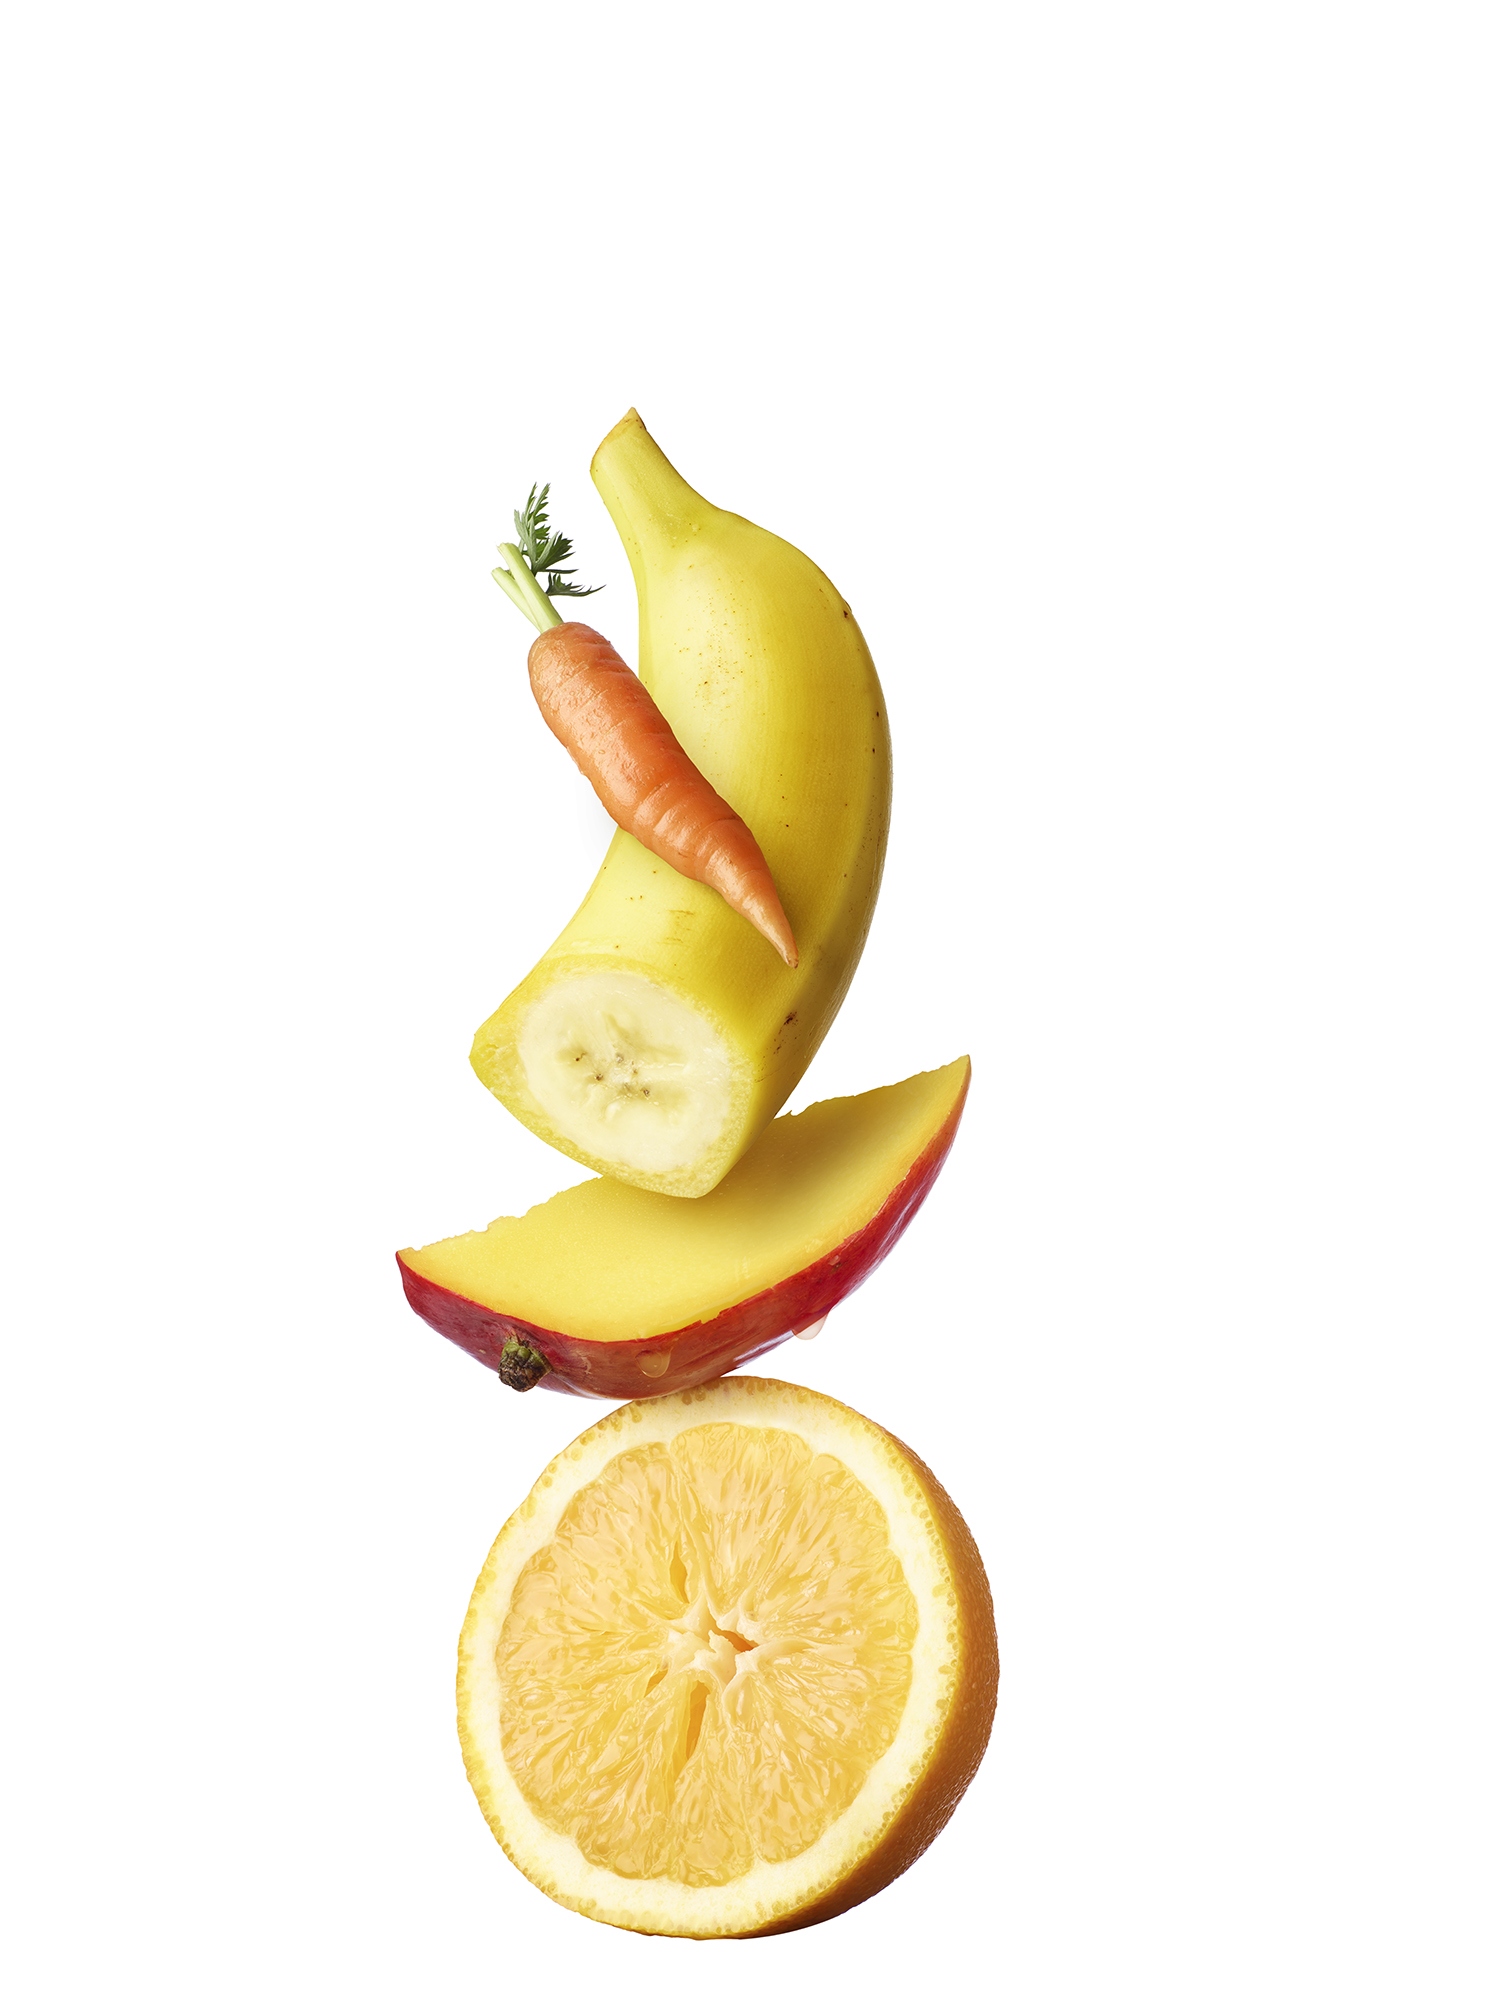 Chelsea Bloxsome | Food Photographer London Orange Mango Banana